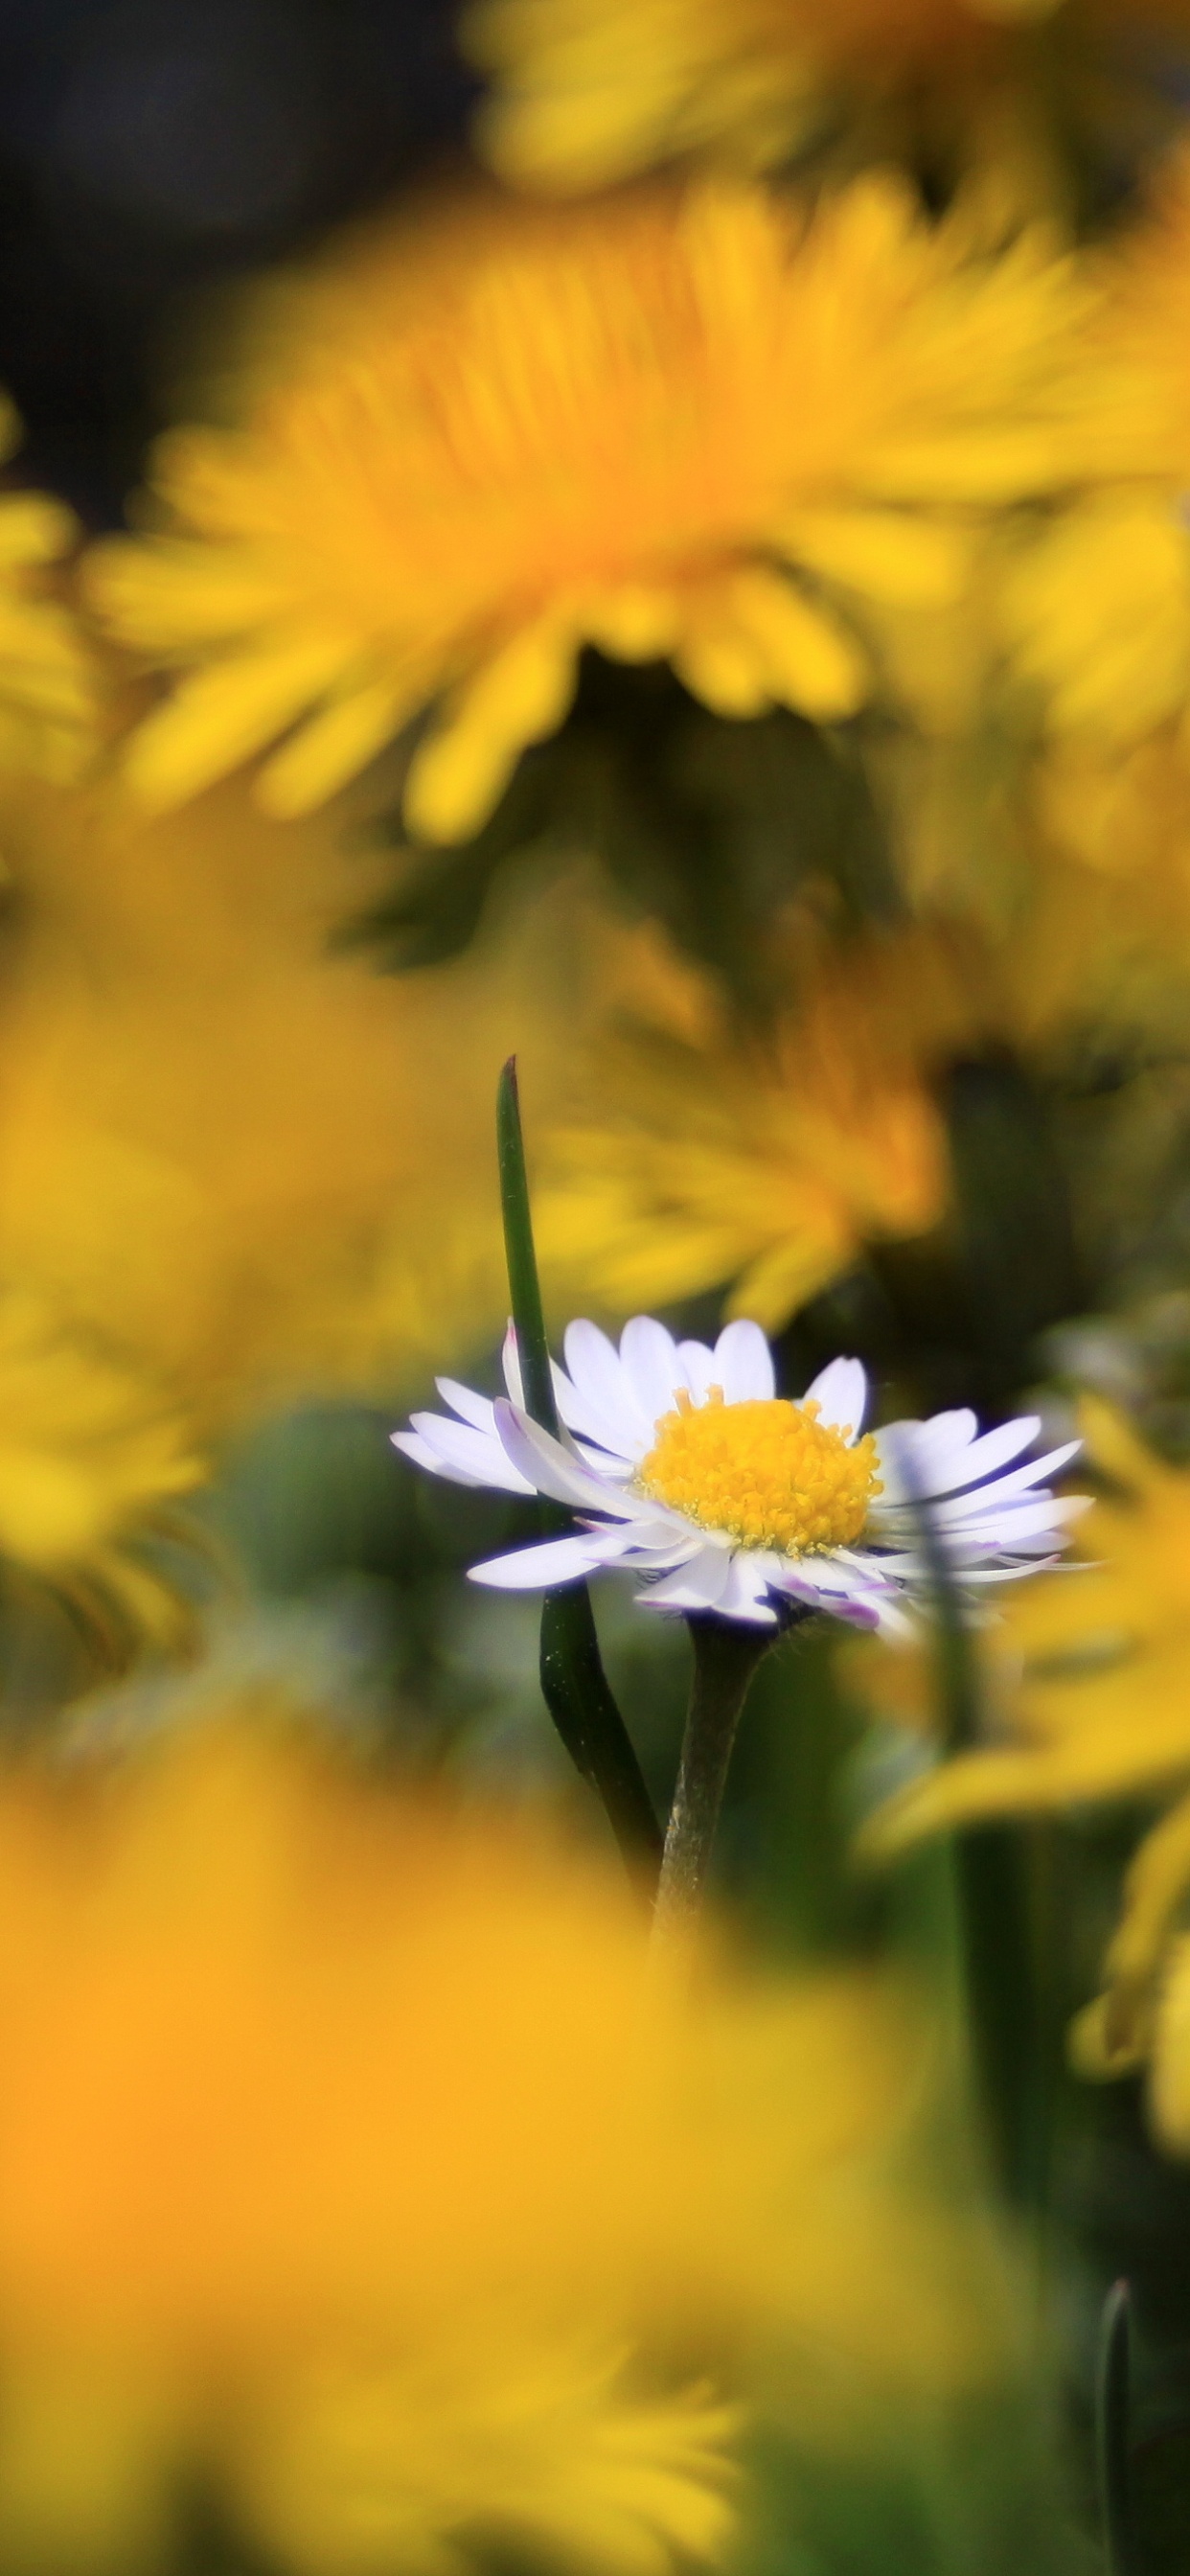 Yellow and White Flowers in Tilt Shift Lens. Wallpaper in 1242x2688 Resolution